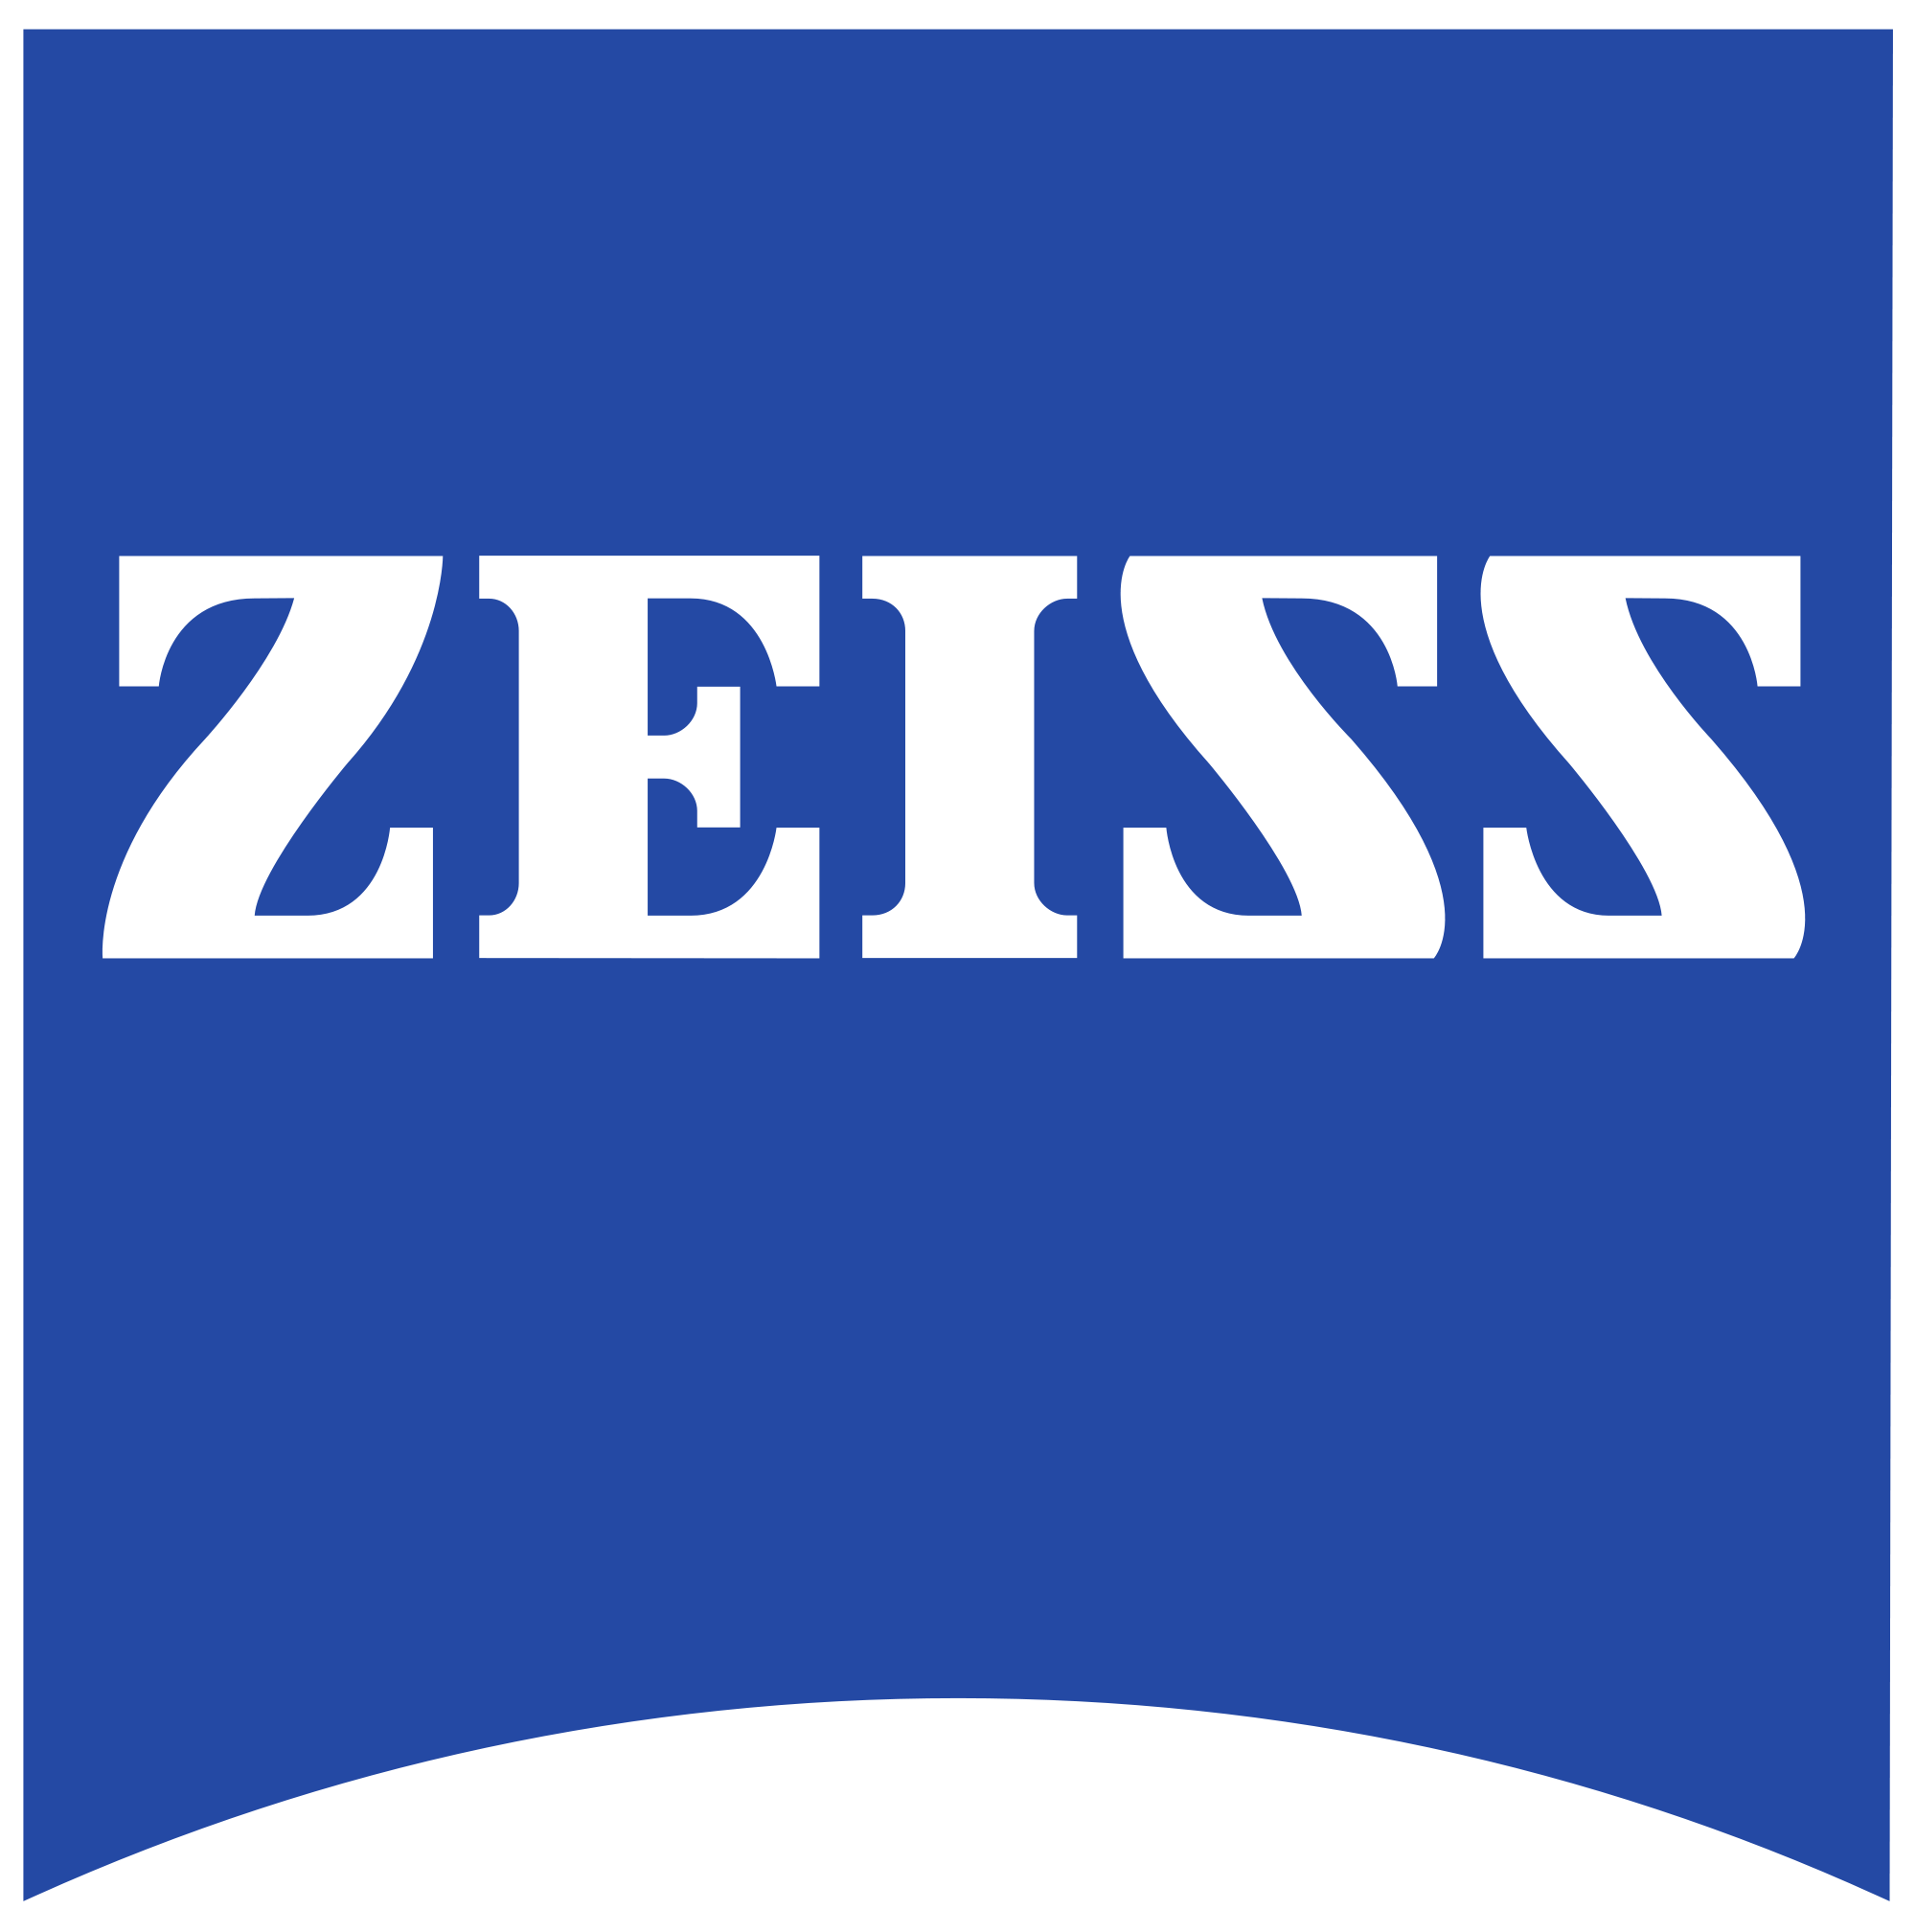 Carl-Zeiss-Jena.png